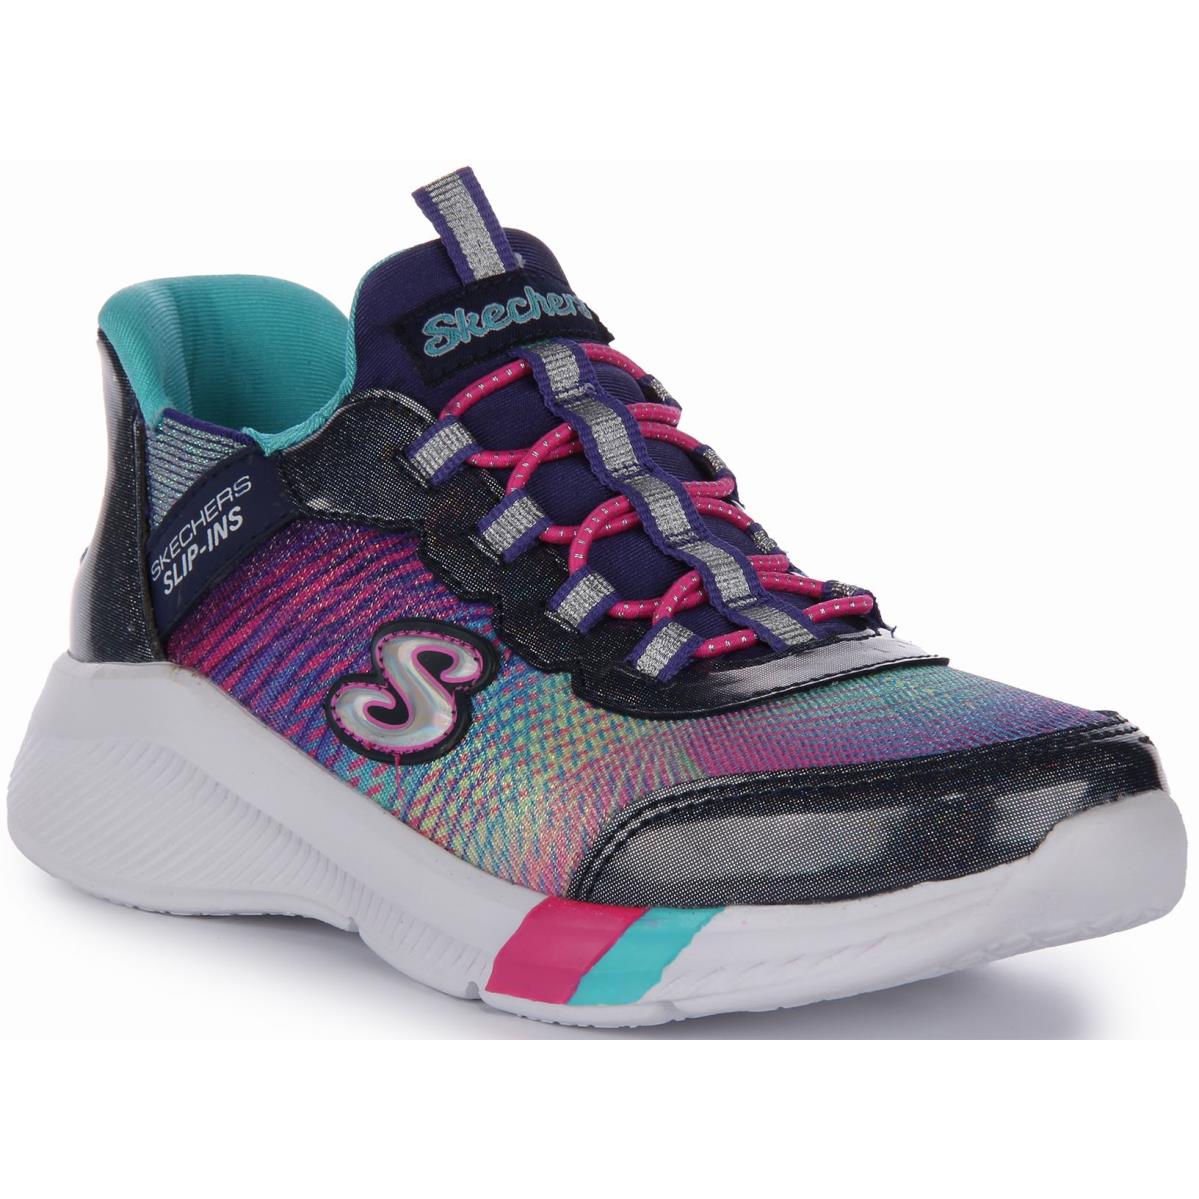 Skechers Dreamy Lites Colorful Prism Shoe Multi Colour Kids US 0.5C - 13.5C MULTI COLO